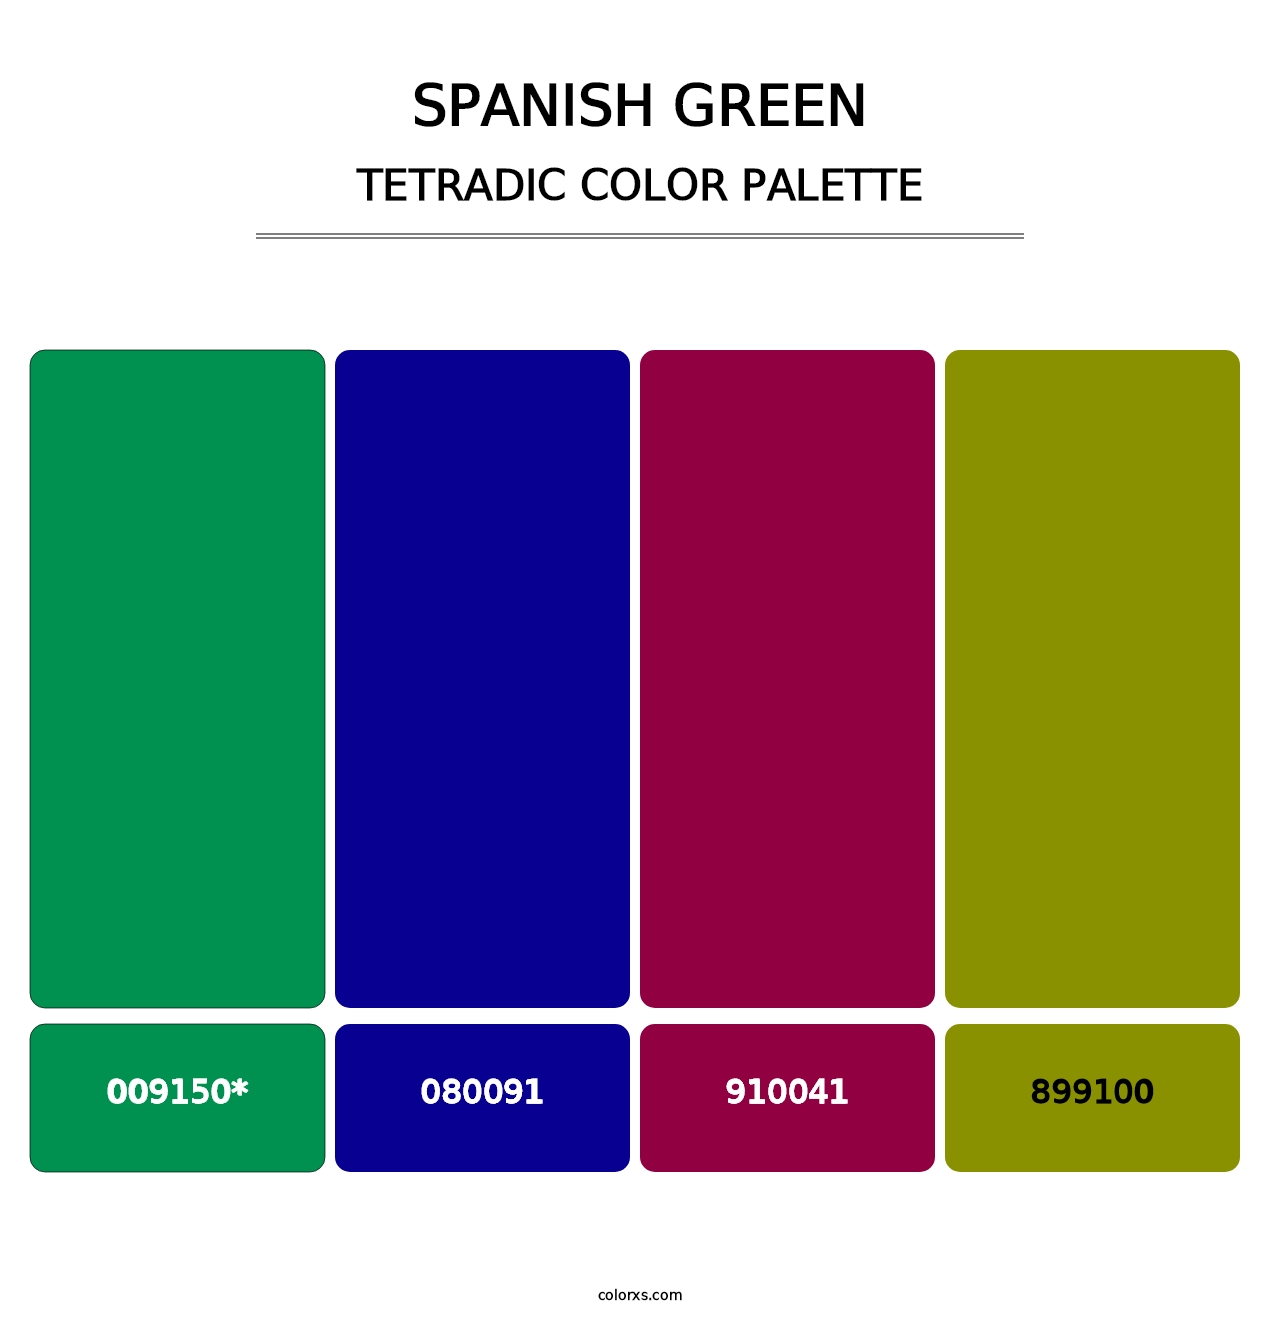 Spanish Green - Tetradic Color Palette